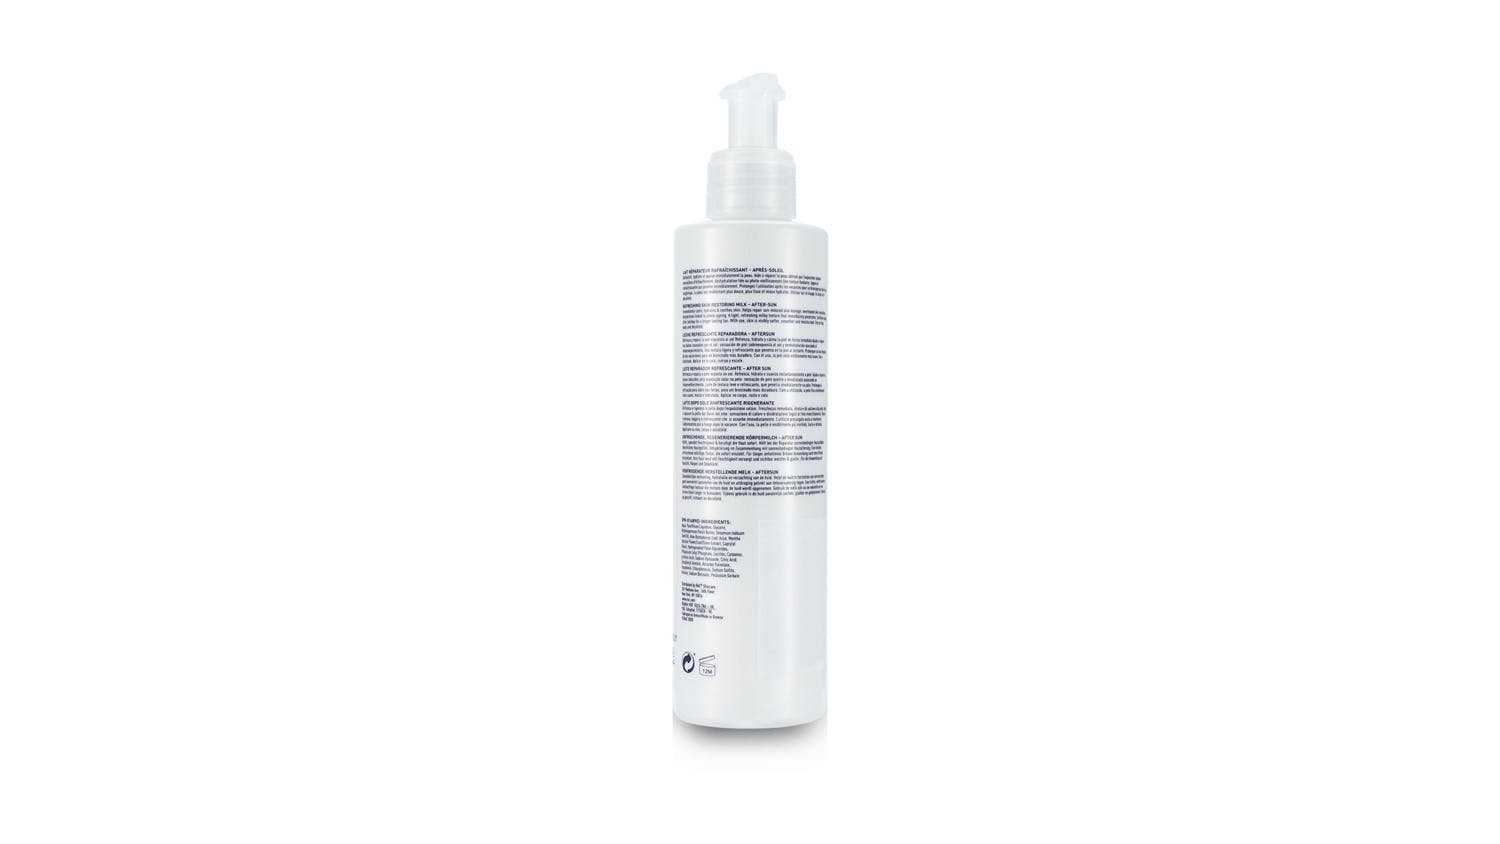 ROC Soleil-Protect Refreshing Skin Restoring Milk (After-Sun) - 200ml/6.7oz